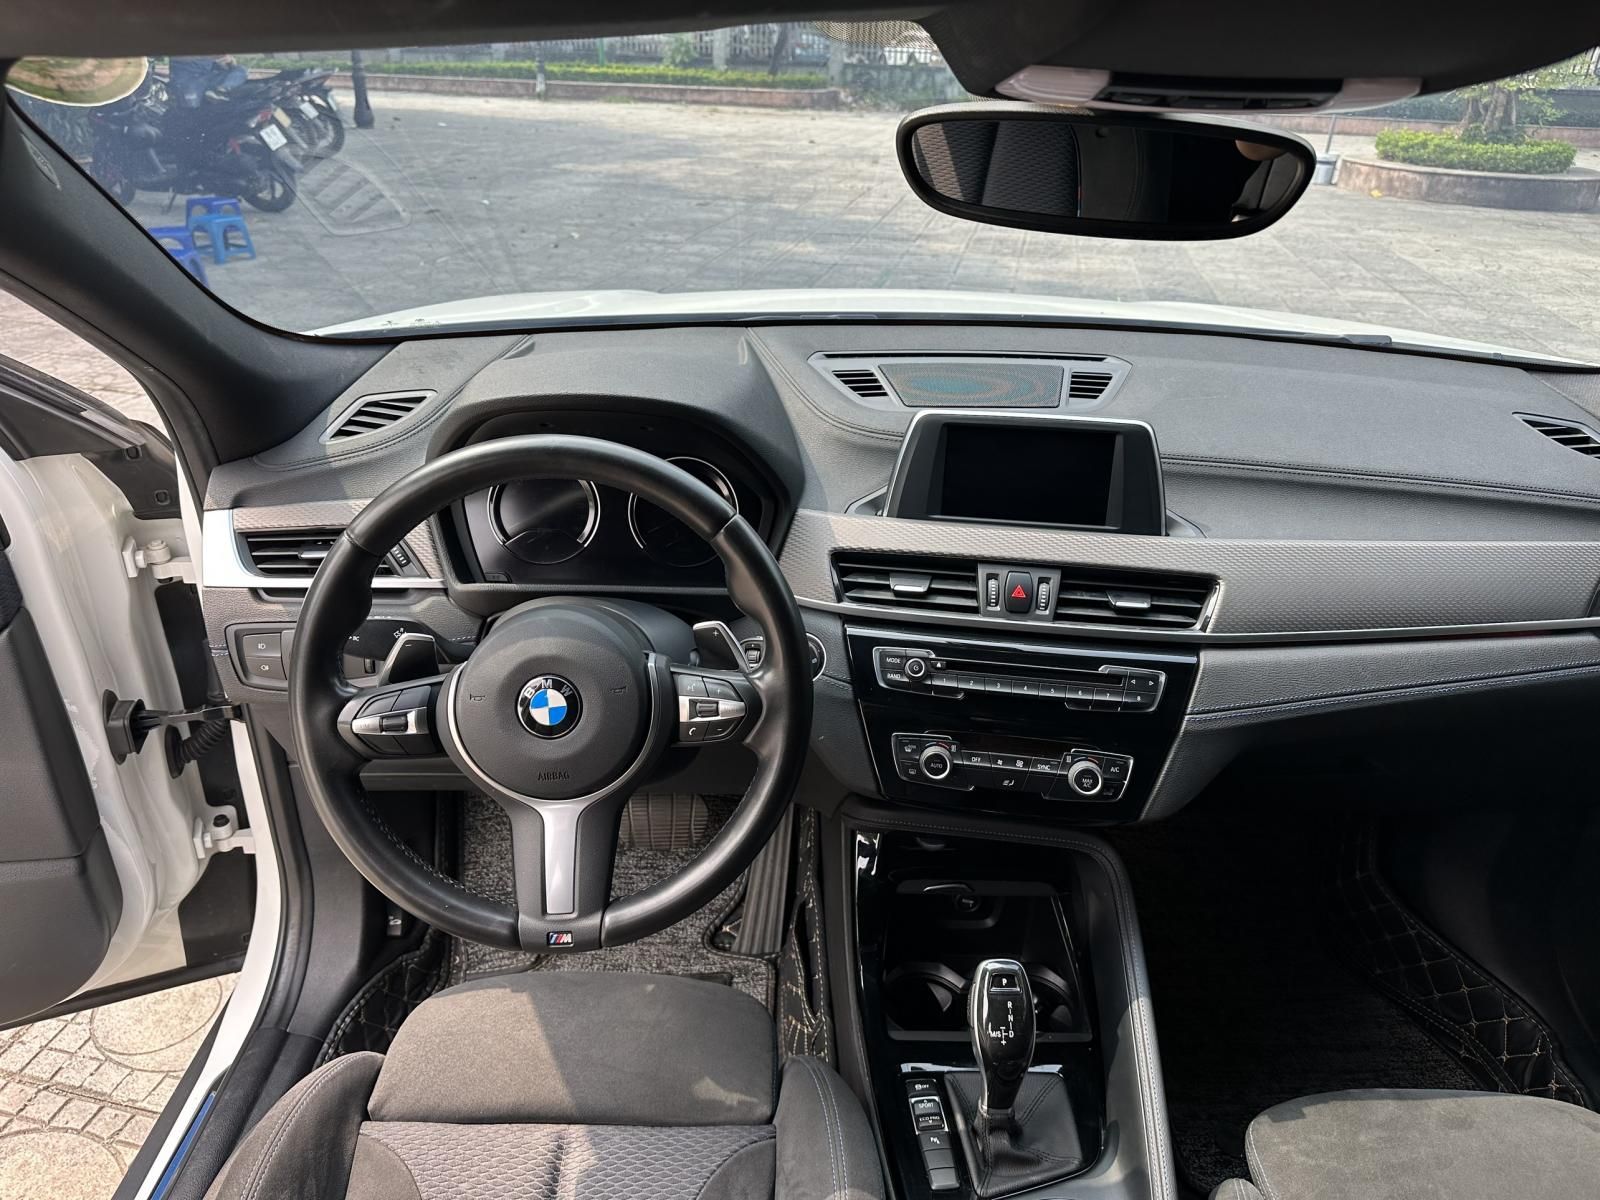 BMW X2 2018 - Tư nhân biển tỉnh